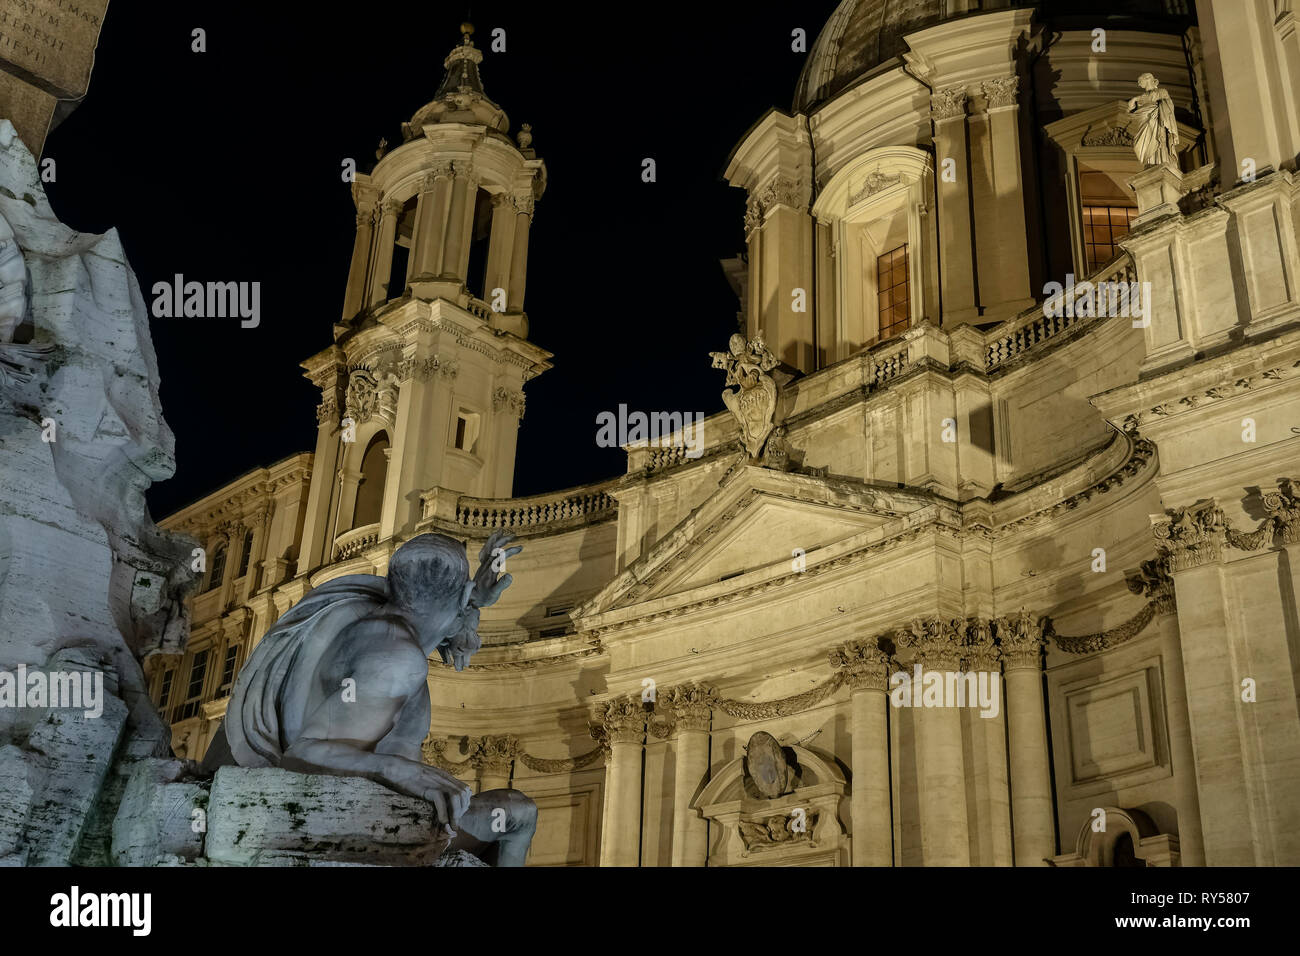 Piazza Navona Platz, Berninis 4 Flüsse Brunnen vor Borromini's Saint Agnese in Agone Kirche. Bei Nacht. Rom, Italien, Europa, Europäische Union. Stockfoto